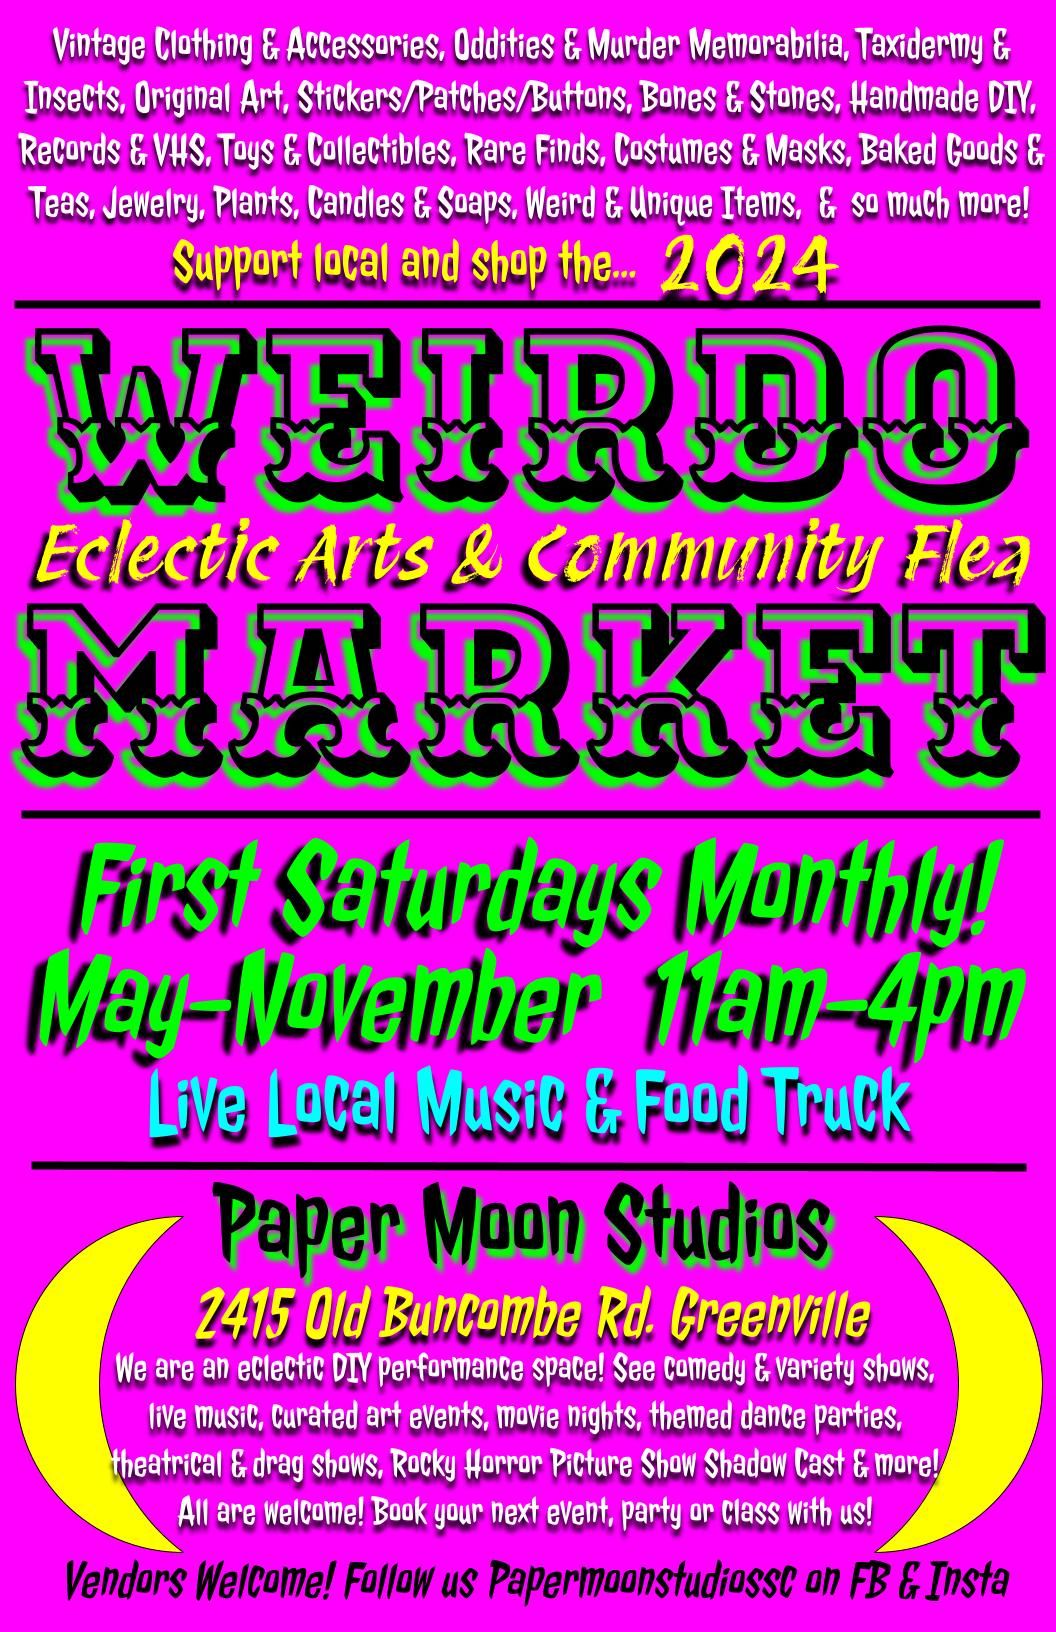 The Weirdo Market! The Upstate's Eclectic Arts & Community Flea at Paper Moon Studios